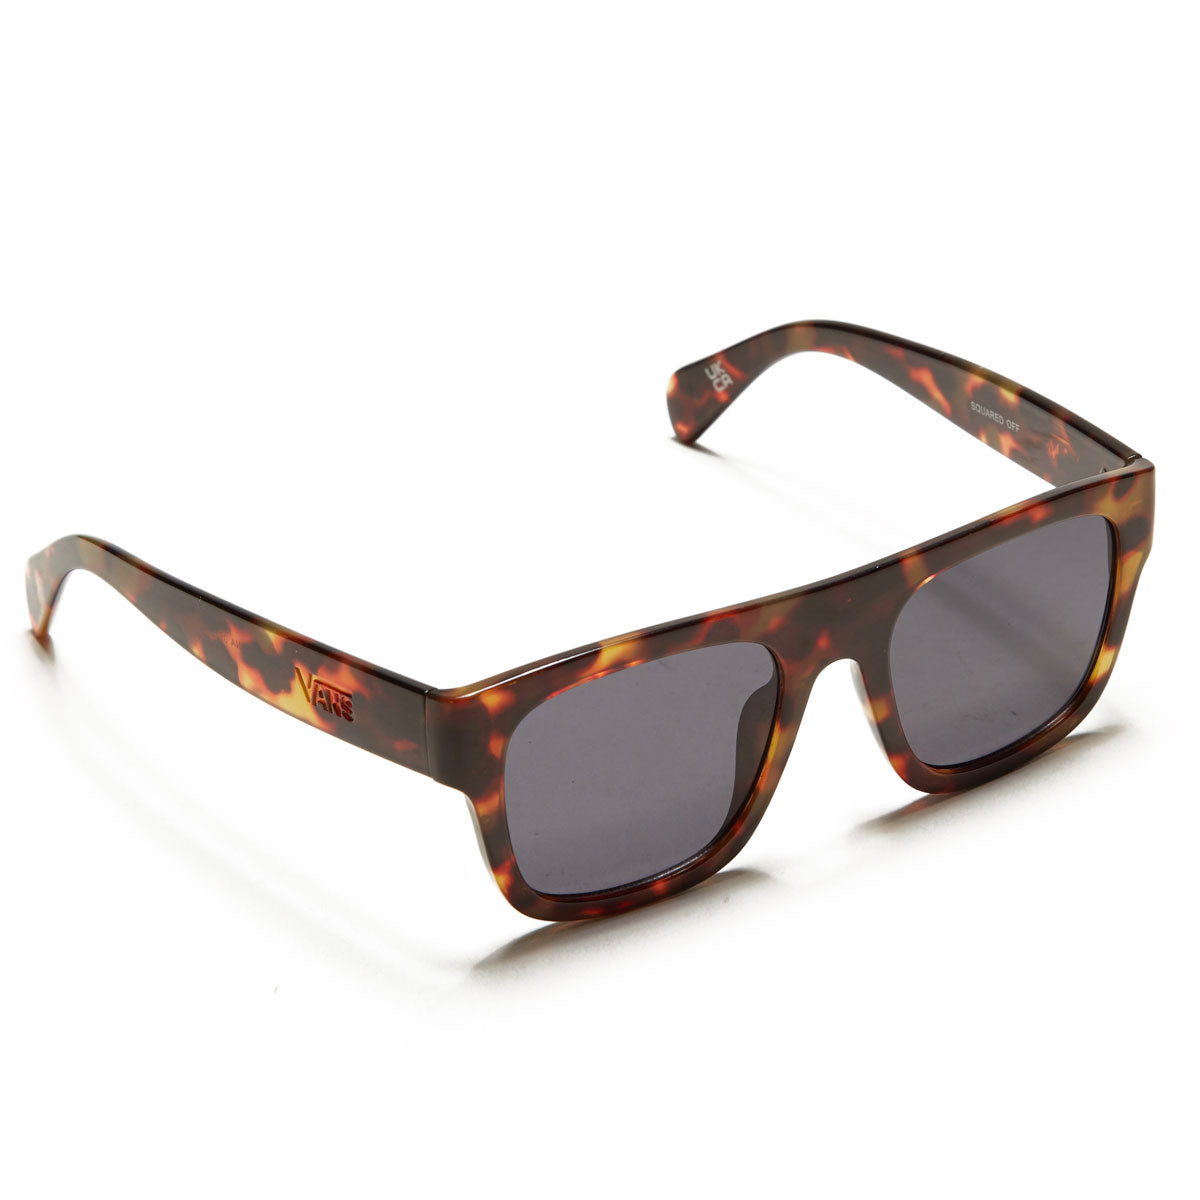 Vans Squared Off Sunglasses - Cheetah Tortoise image 1